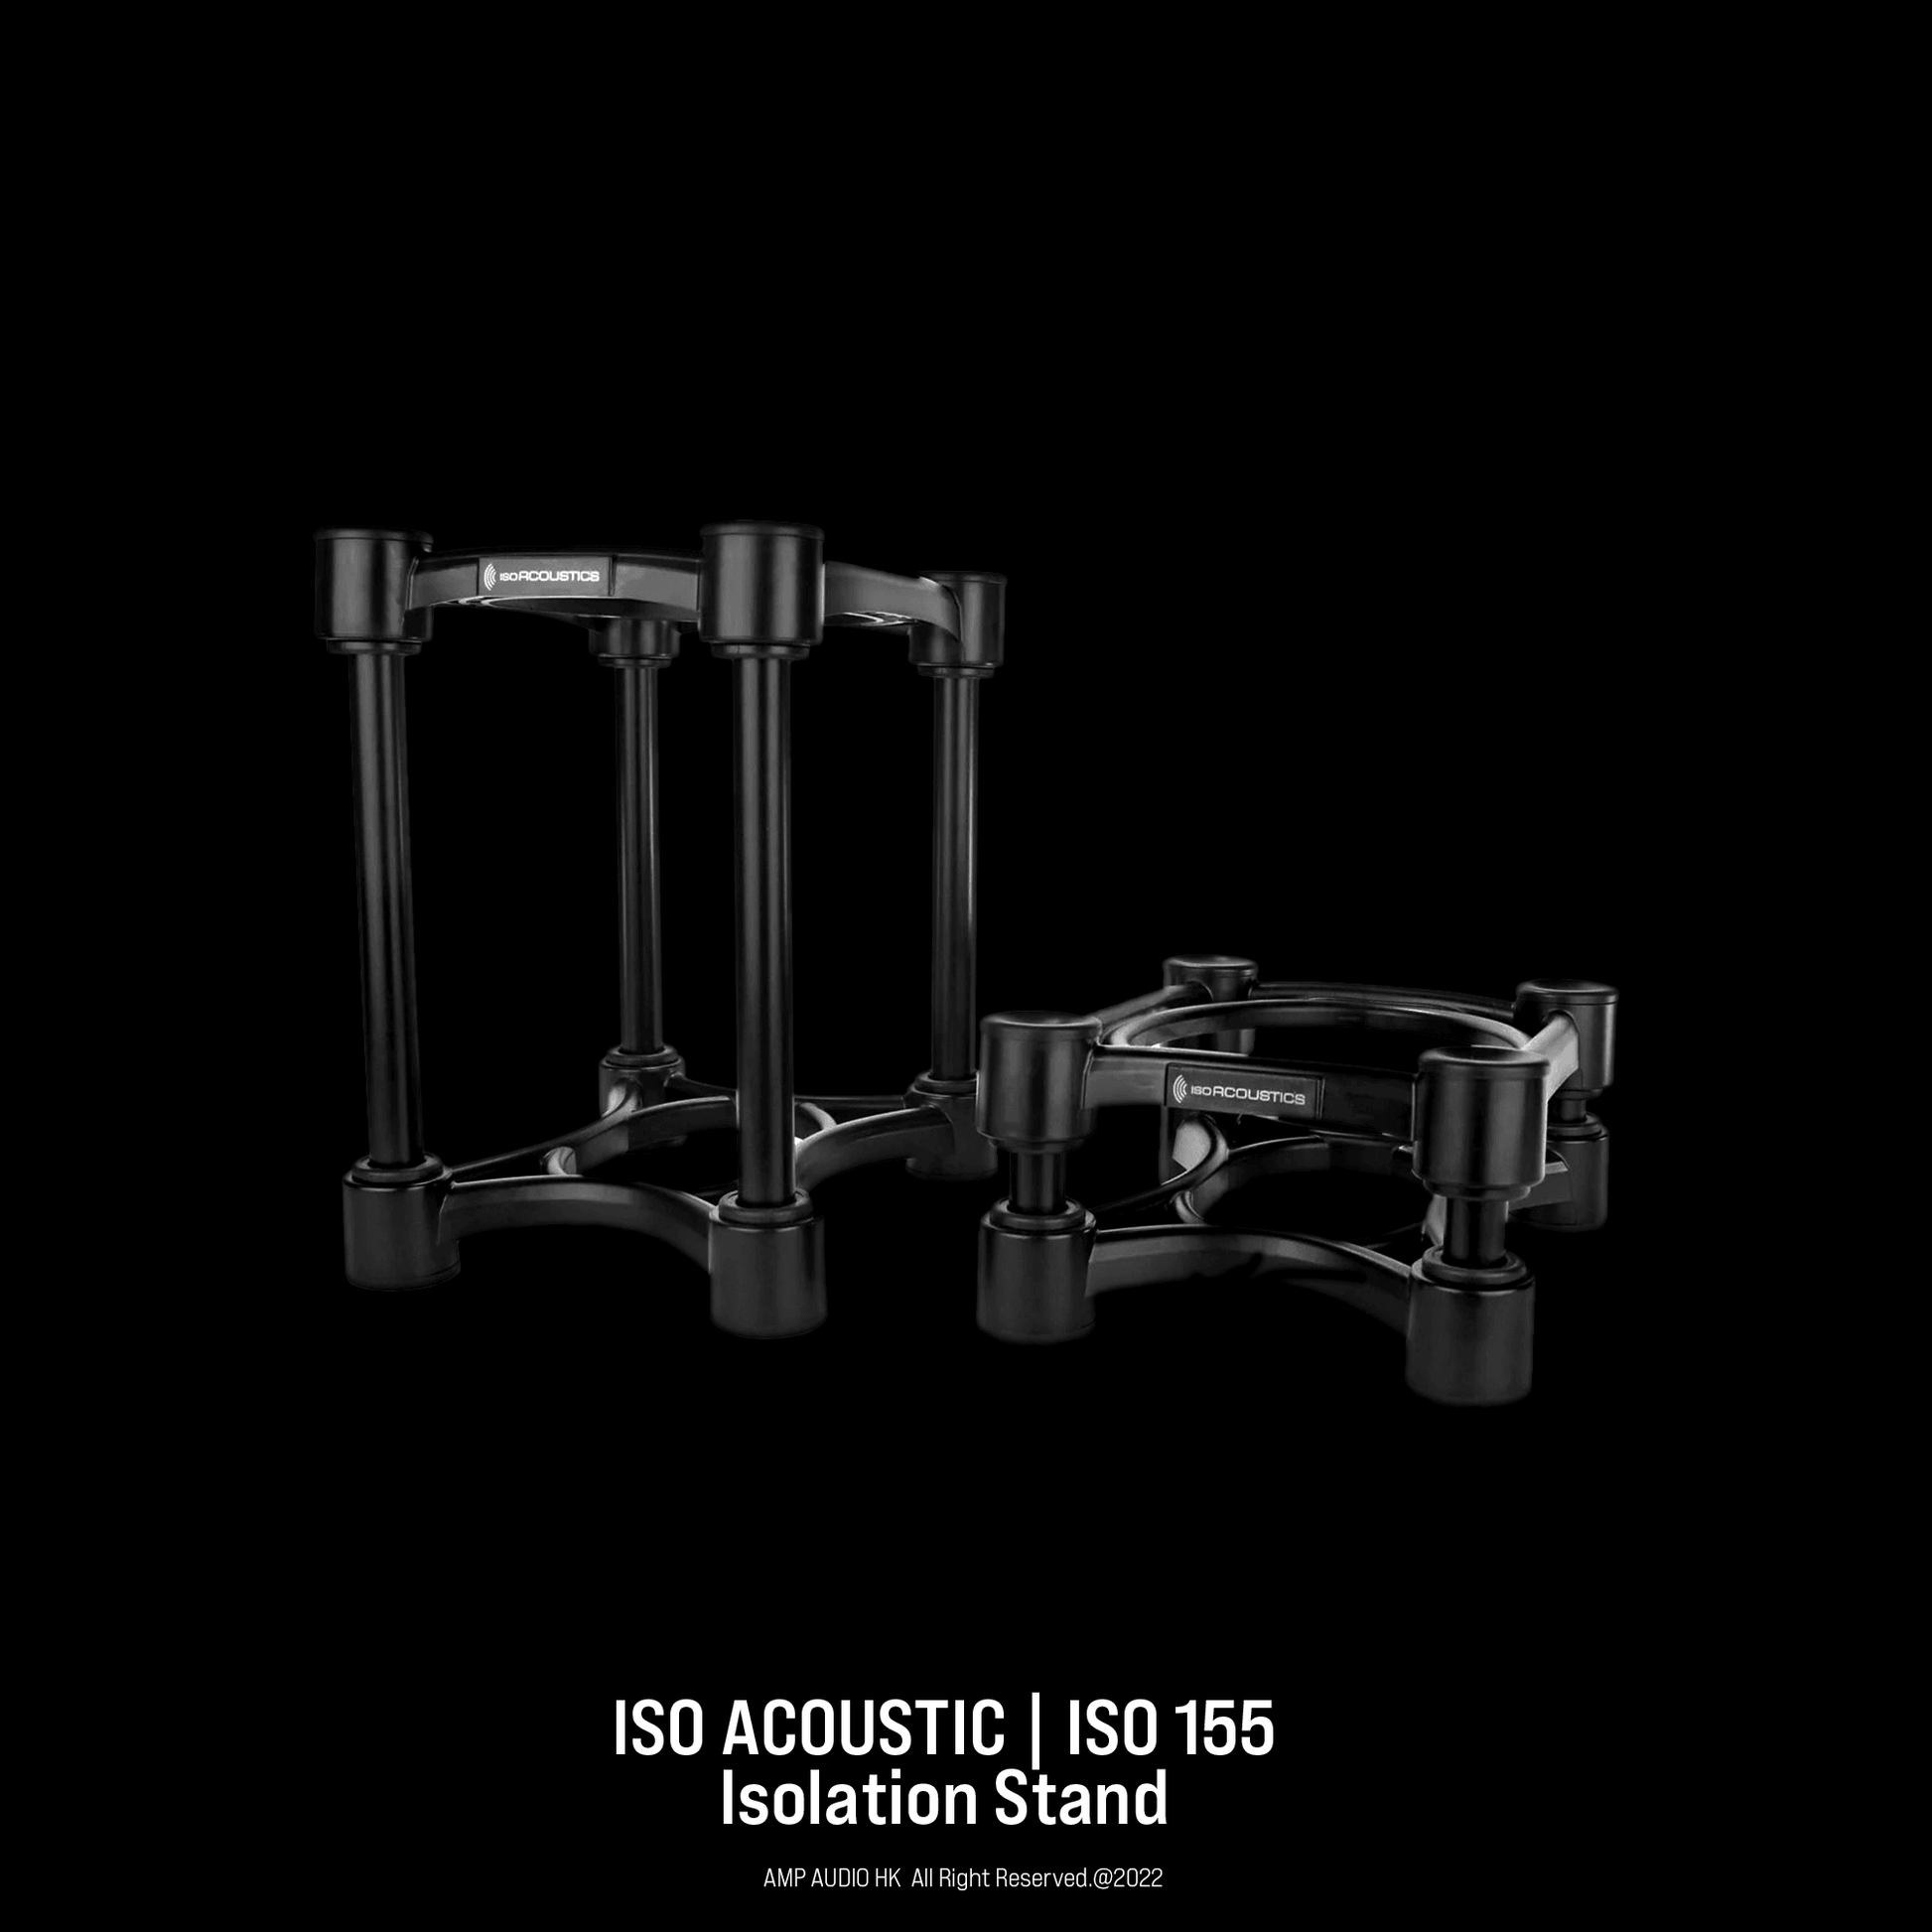 Iso Acoustic | ISO 155 - AMP AUDIO